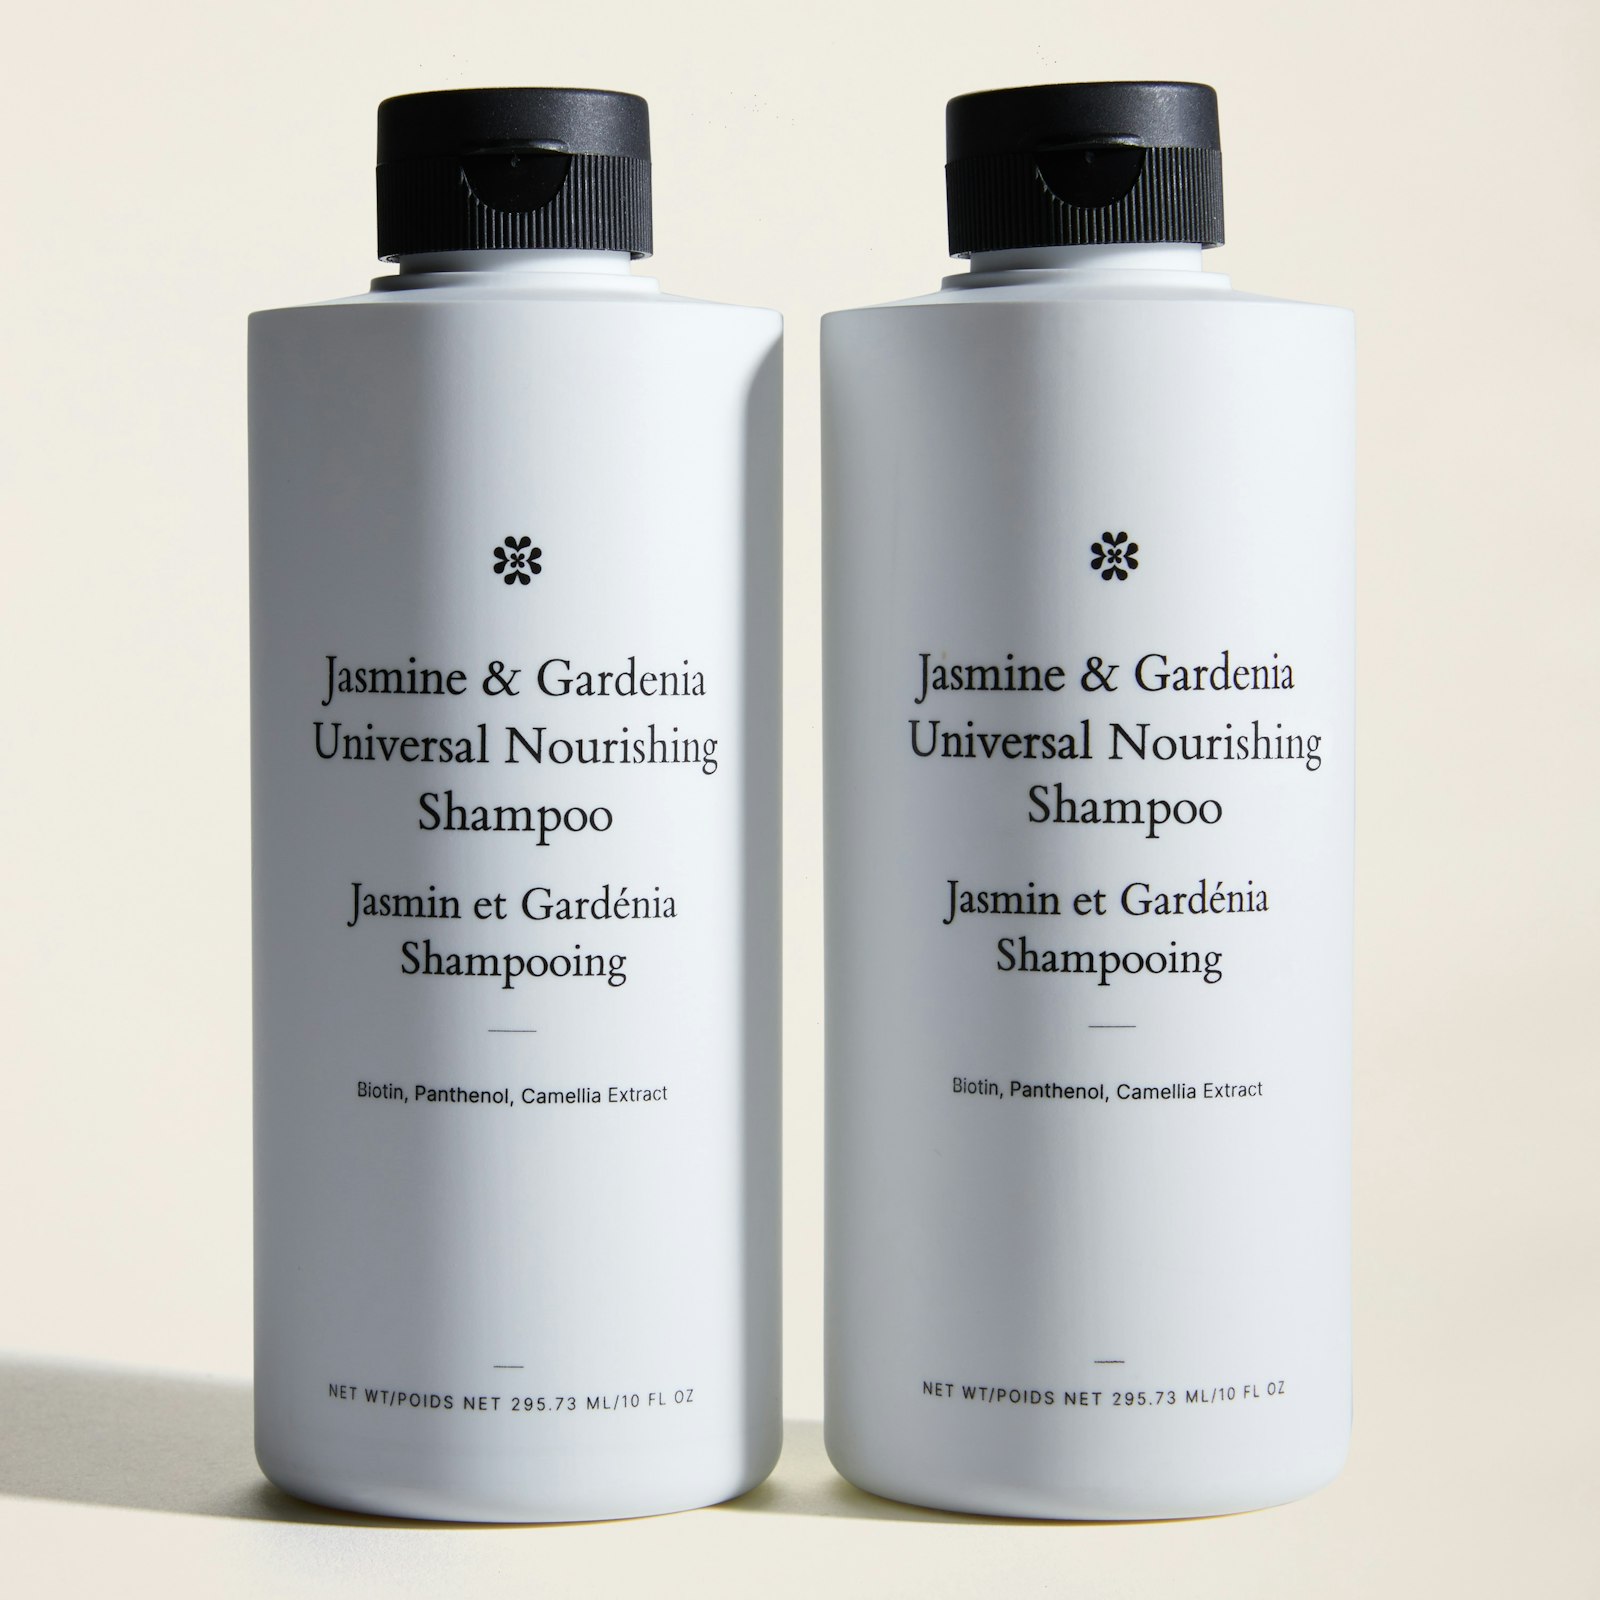 Universal Nourishing Shampoo